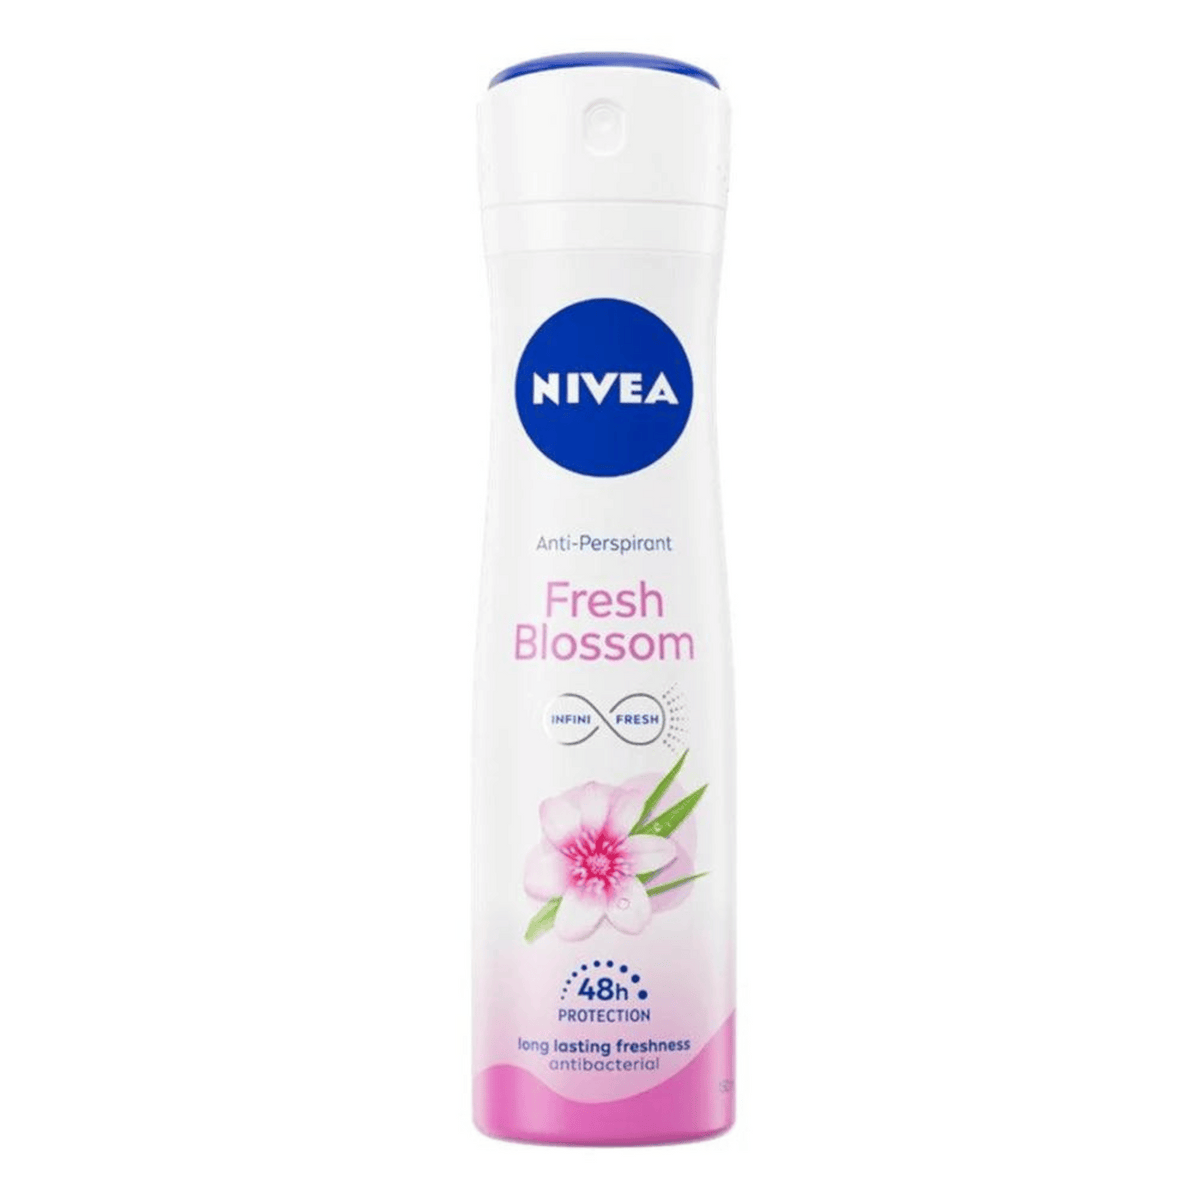 Primary Image of Women's Spray Fresh Blossom Anti-Perspirant Deodorant